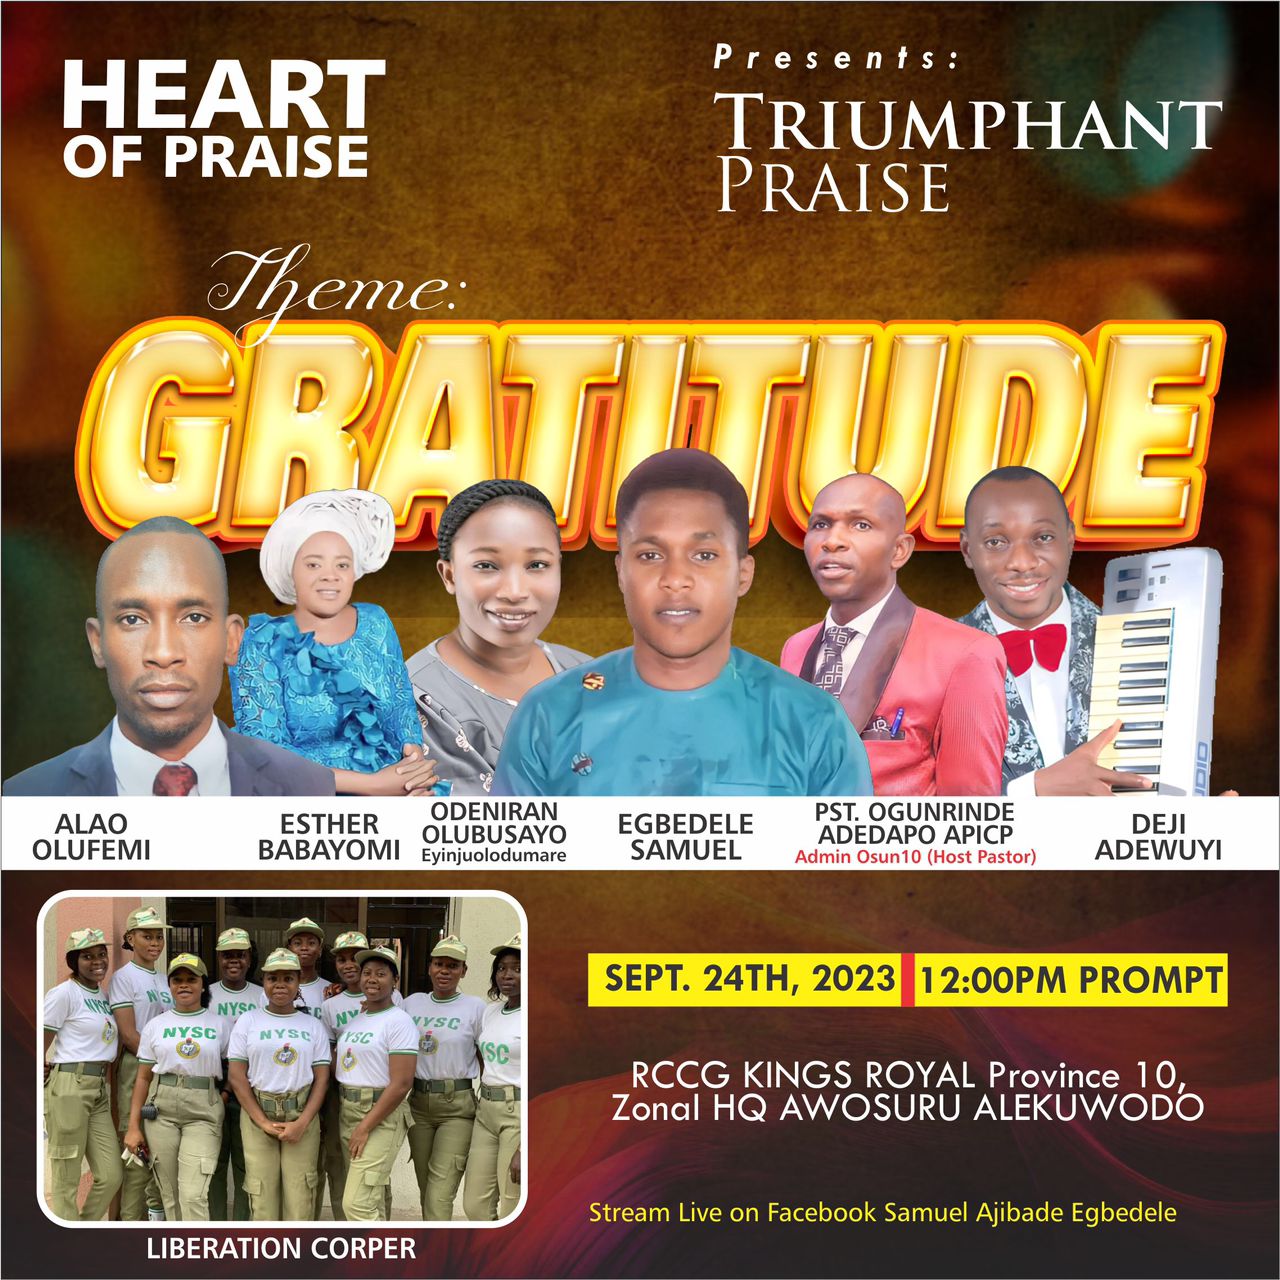 Heart of Praise Presents Triumphant Praise “GRATITUDE”, September 24th In Osogbo city